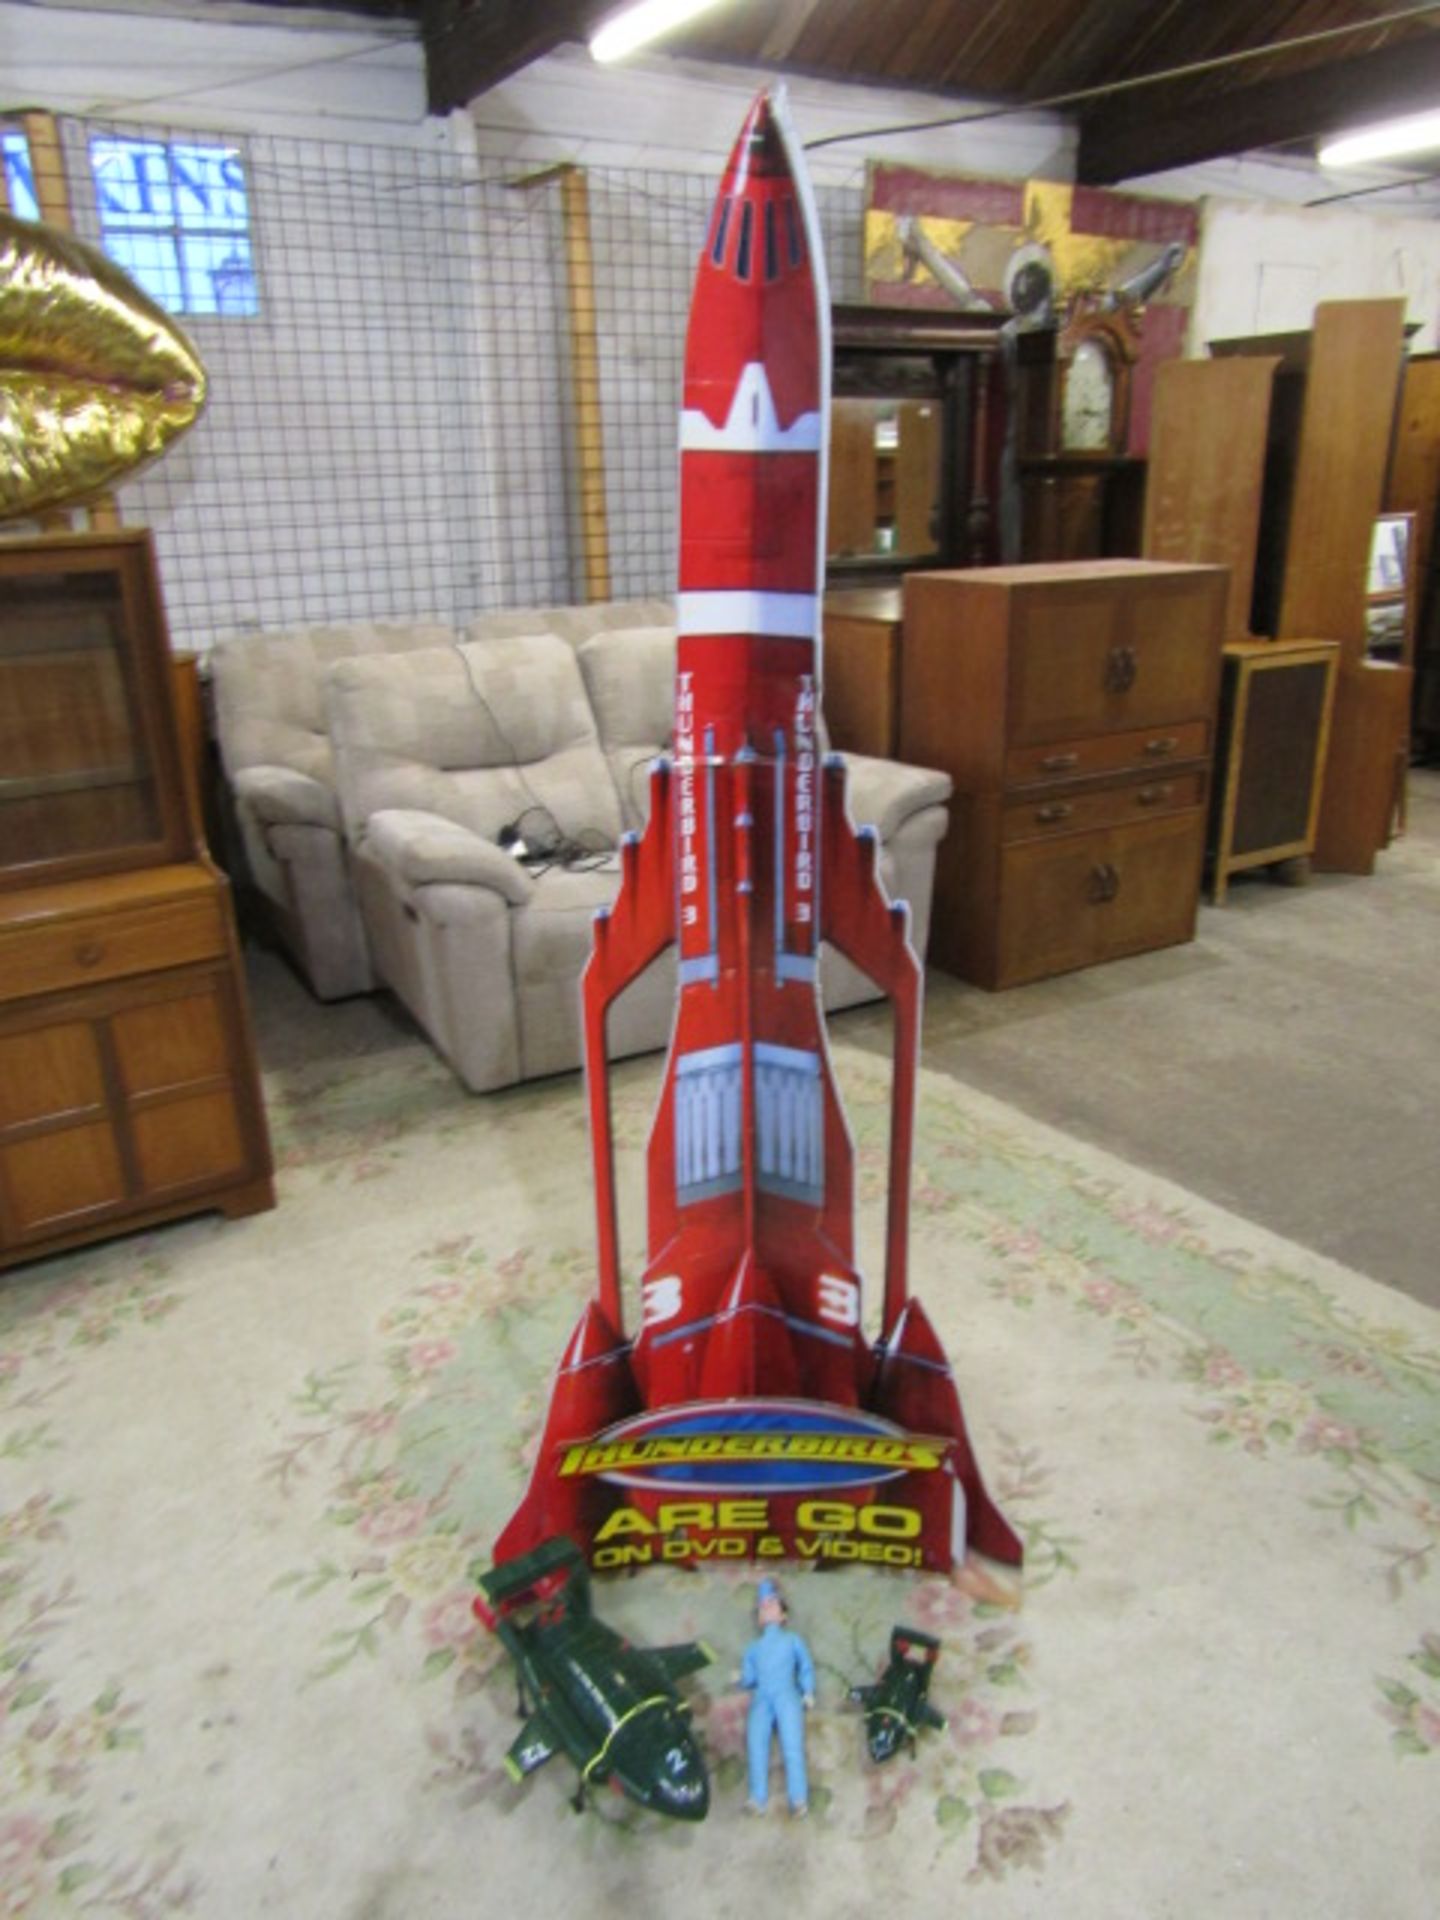 Thunderbirds cardboard shop display rocket and toys